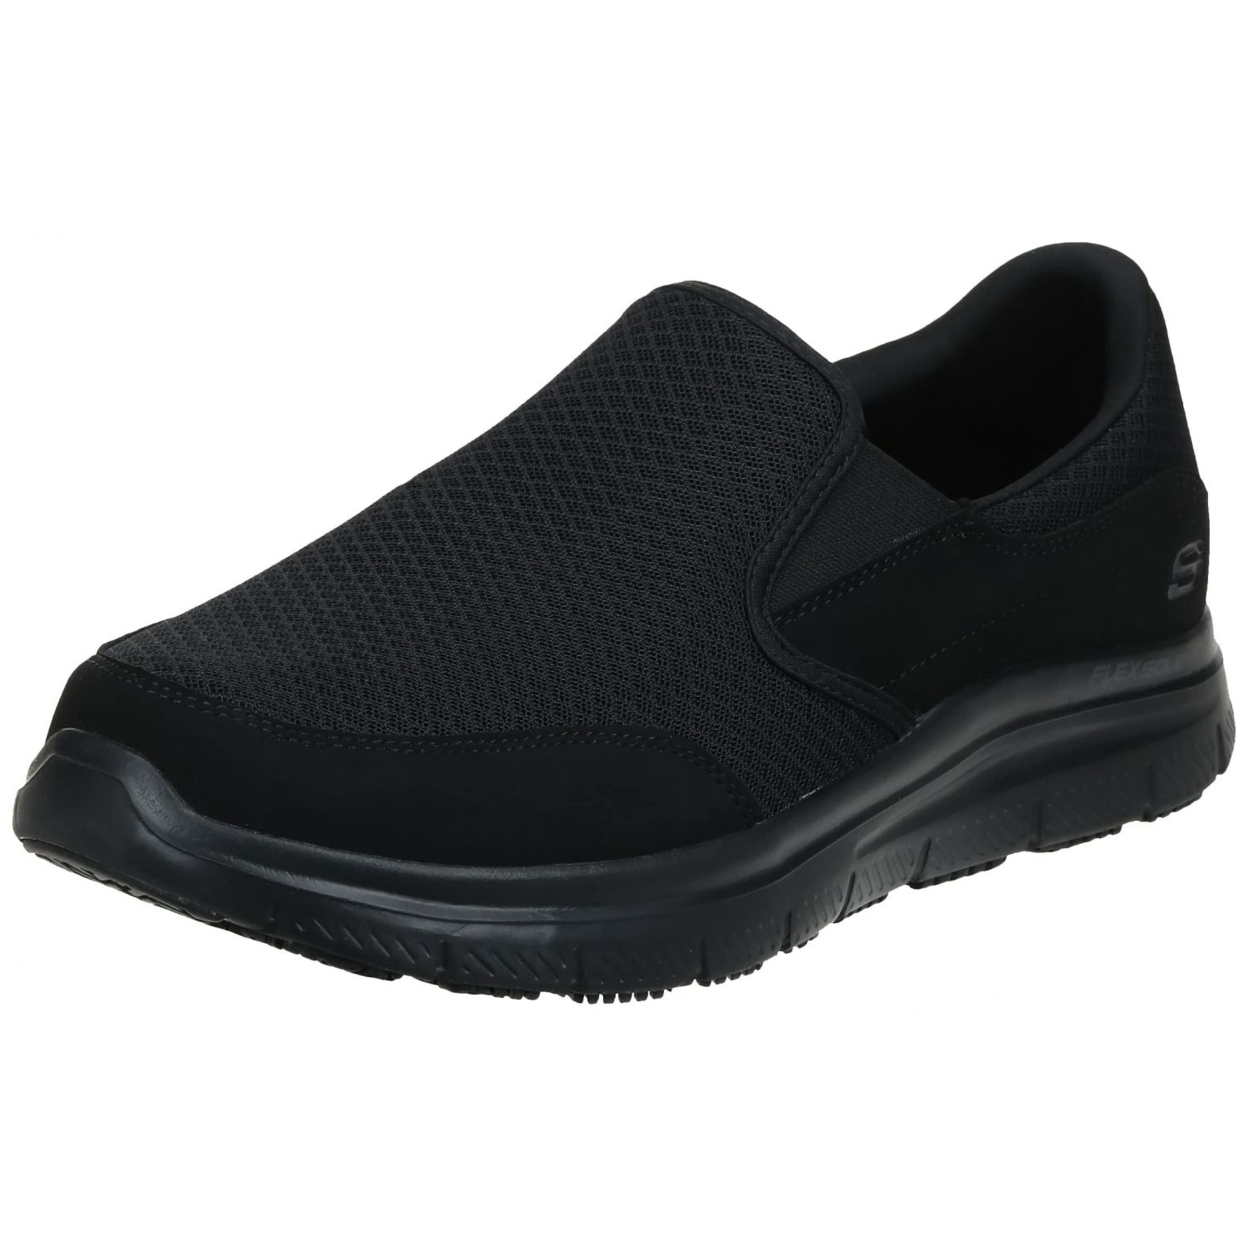 Skechers For Work Men's Flex Advantage Mcallen Food Service Shoe ONE SIZE BLACK - BLACK, 10.5 Wide